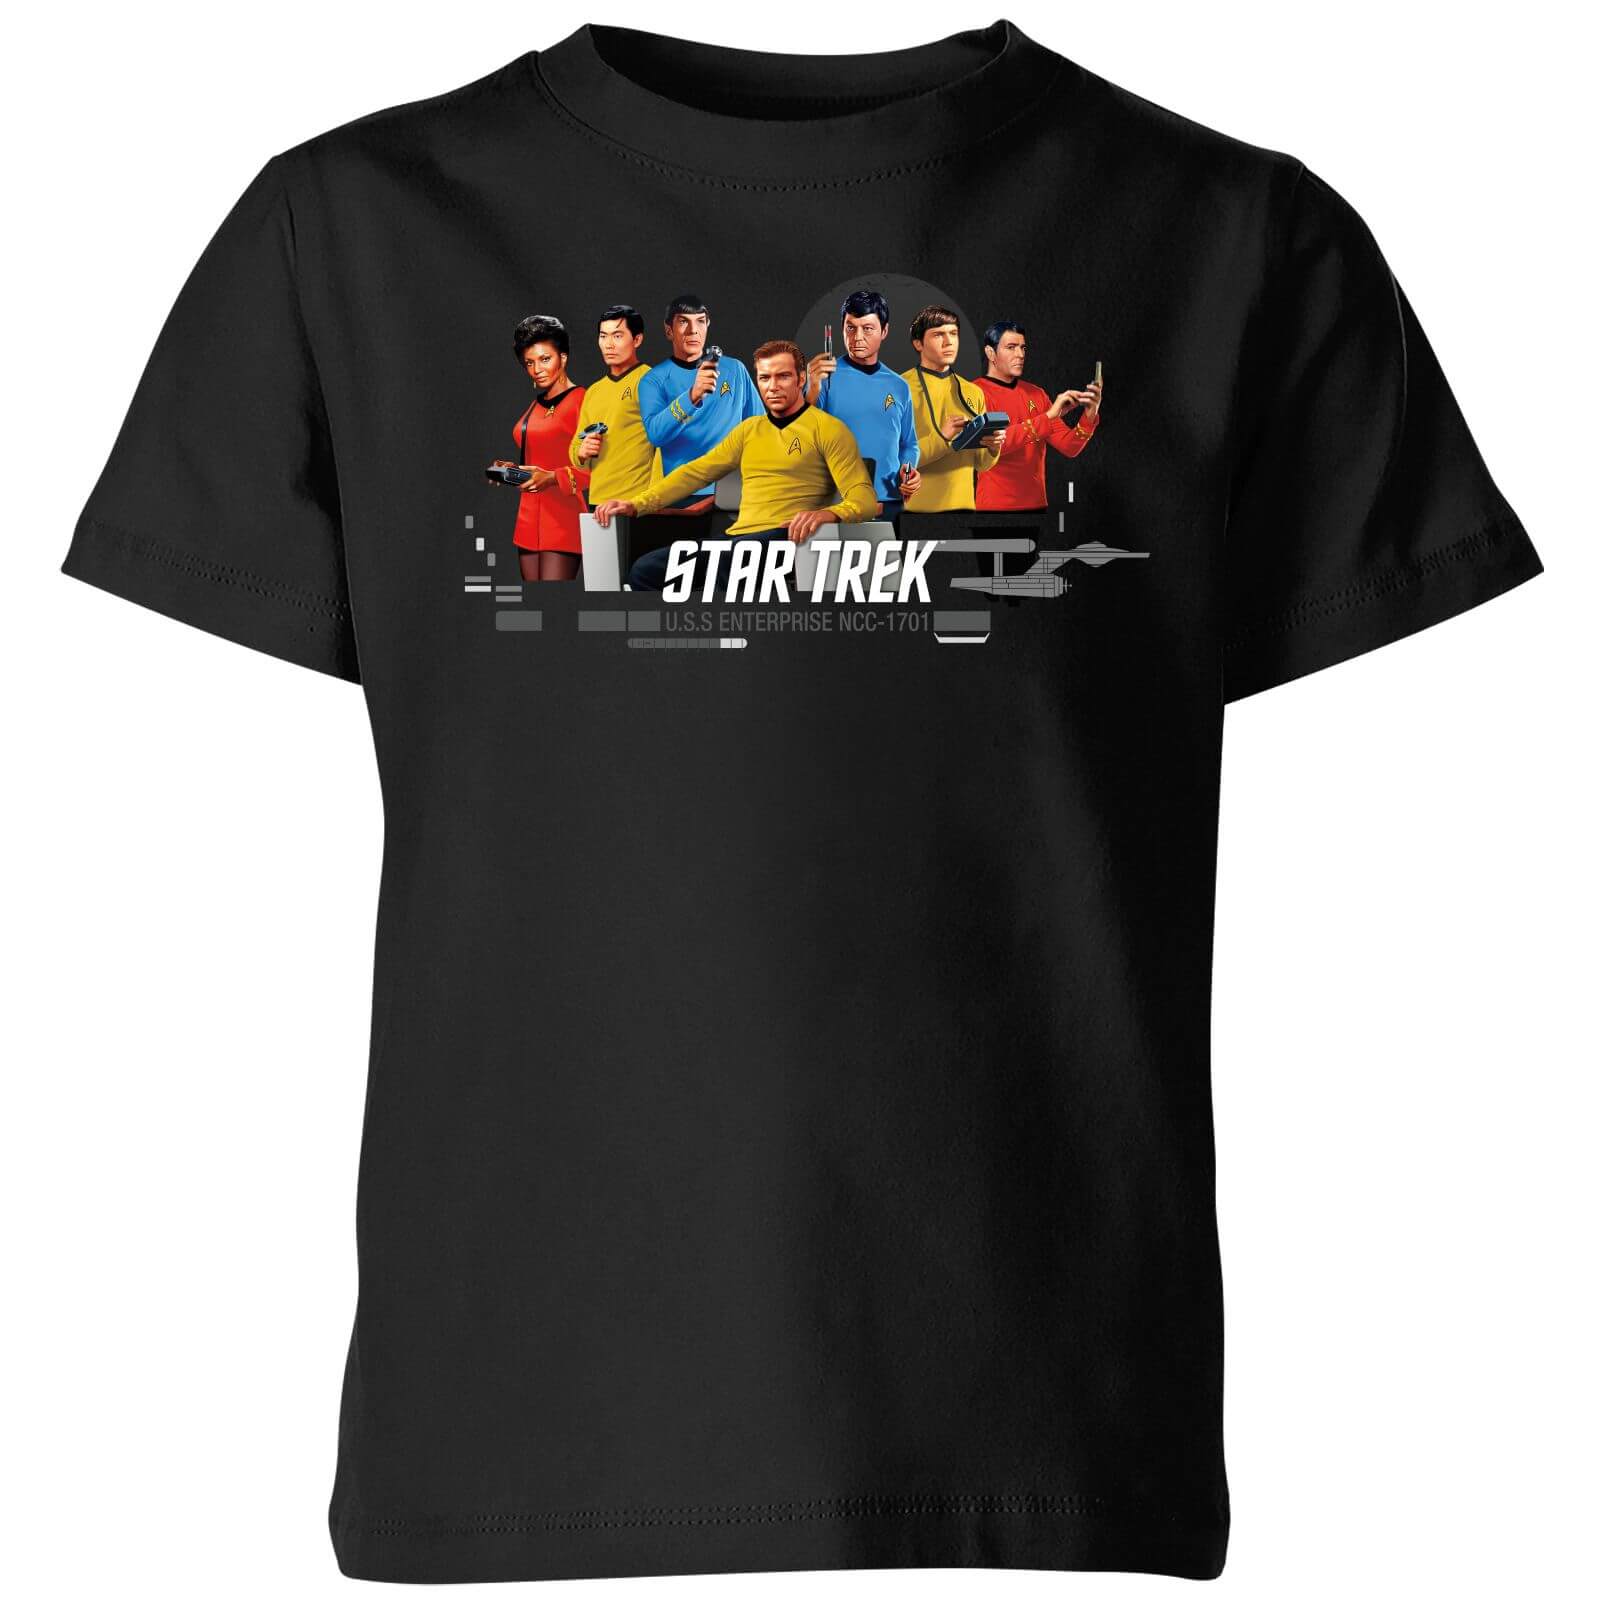 USS Enterprise Crew Star Trek Kids' T-Shirt - Black - 5-6 Years - Black